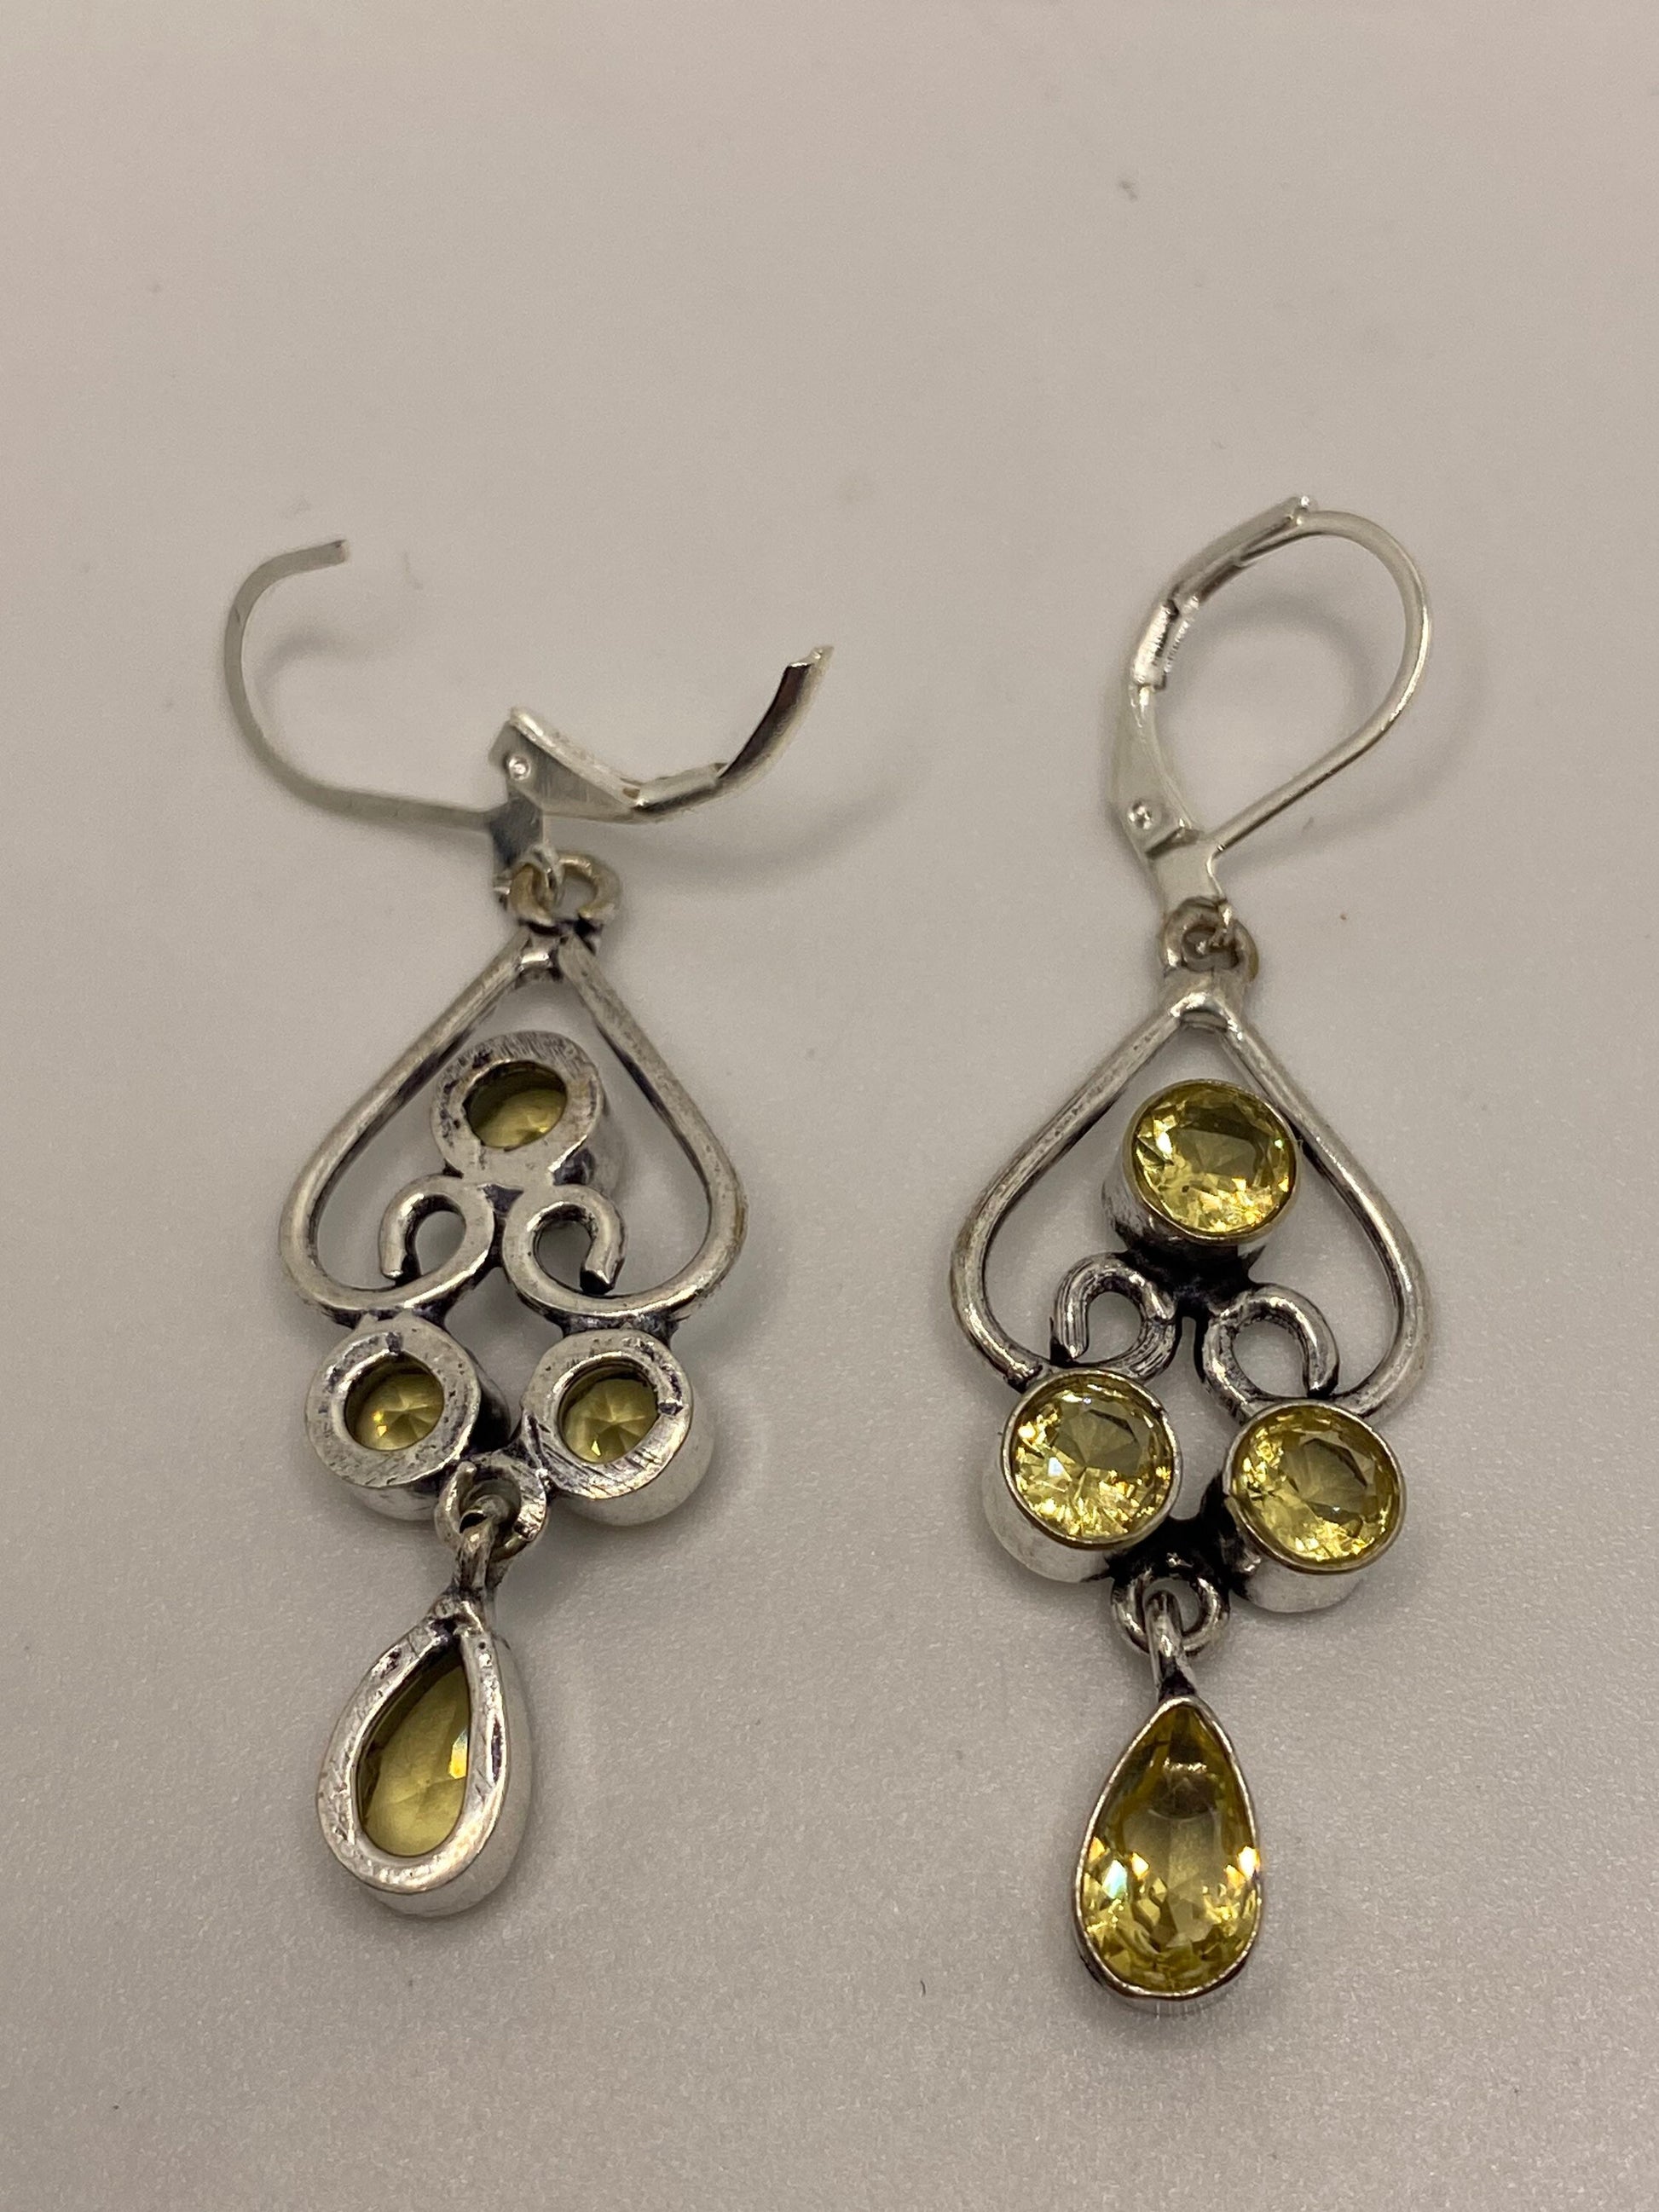 Vintage Golden Citrine Earrings 925 Sterling Silver Deco Dangle Chandelier